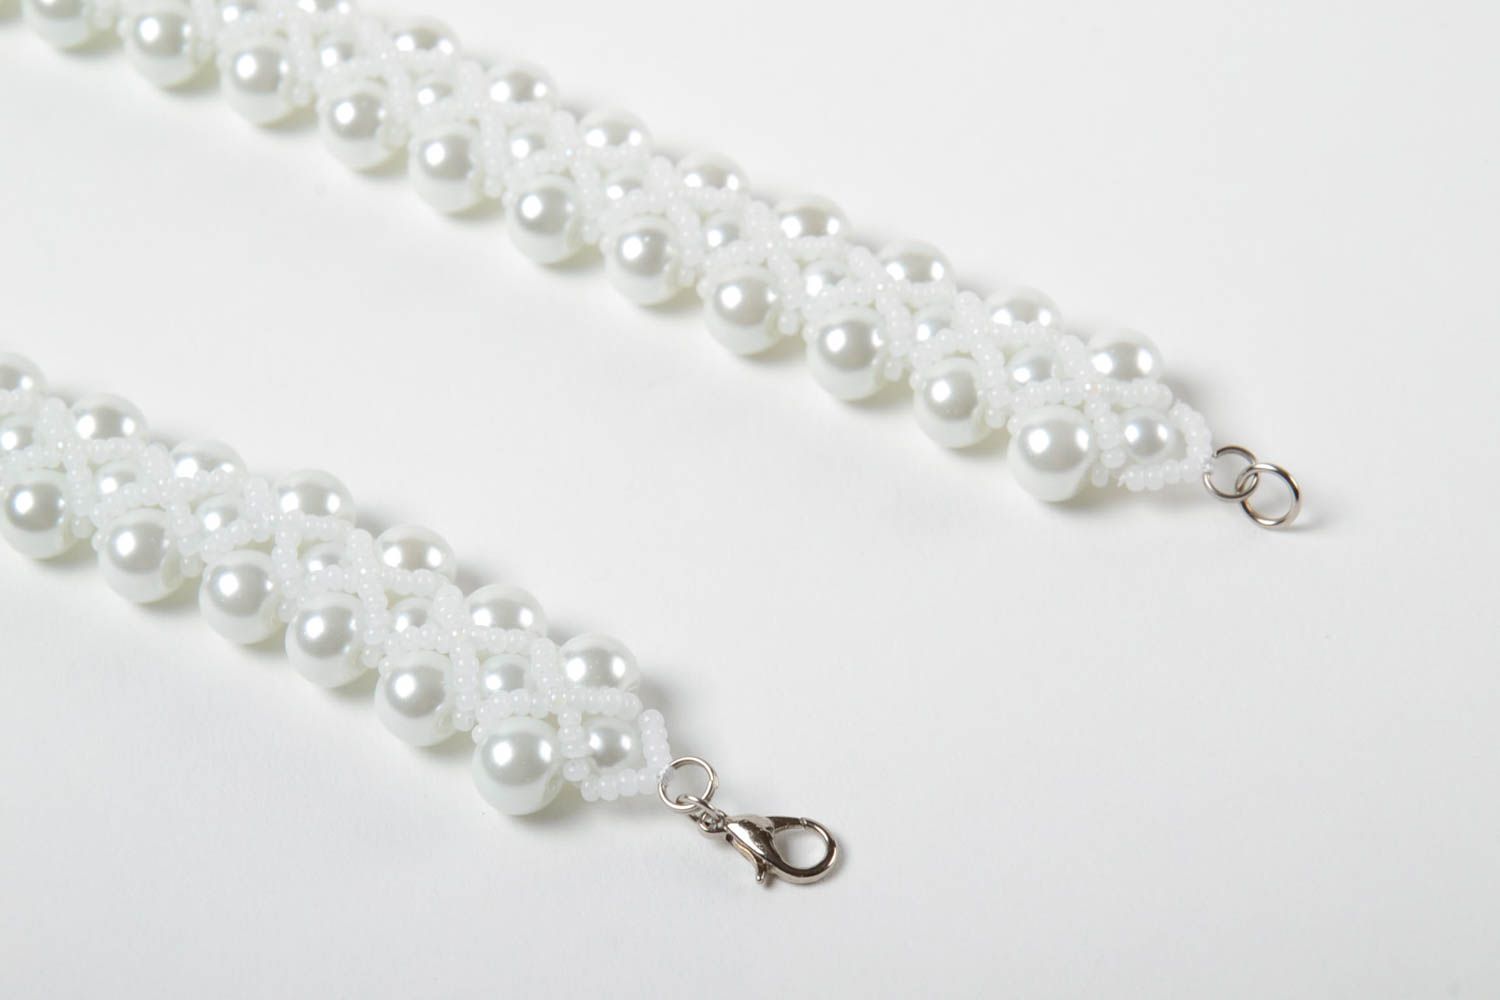 Stylish handmade beaded necklace womens jewelry designs beadwork ideas photo 4